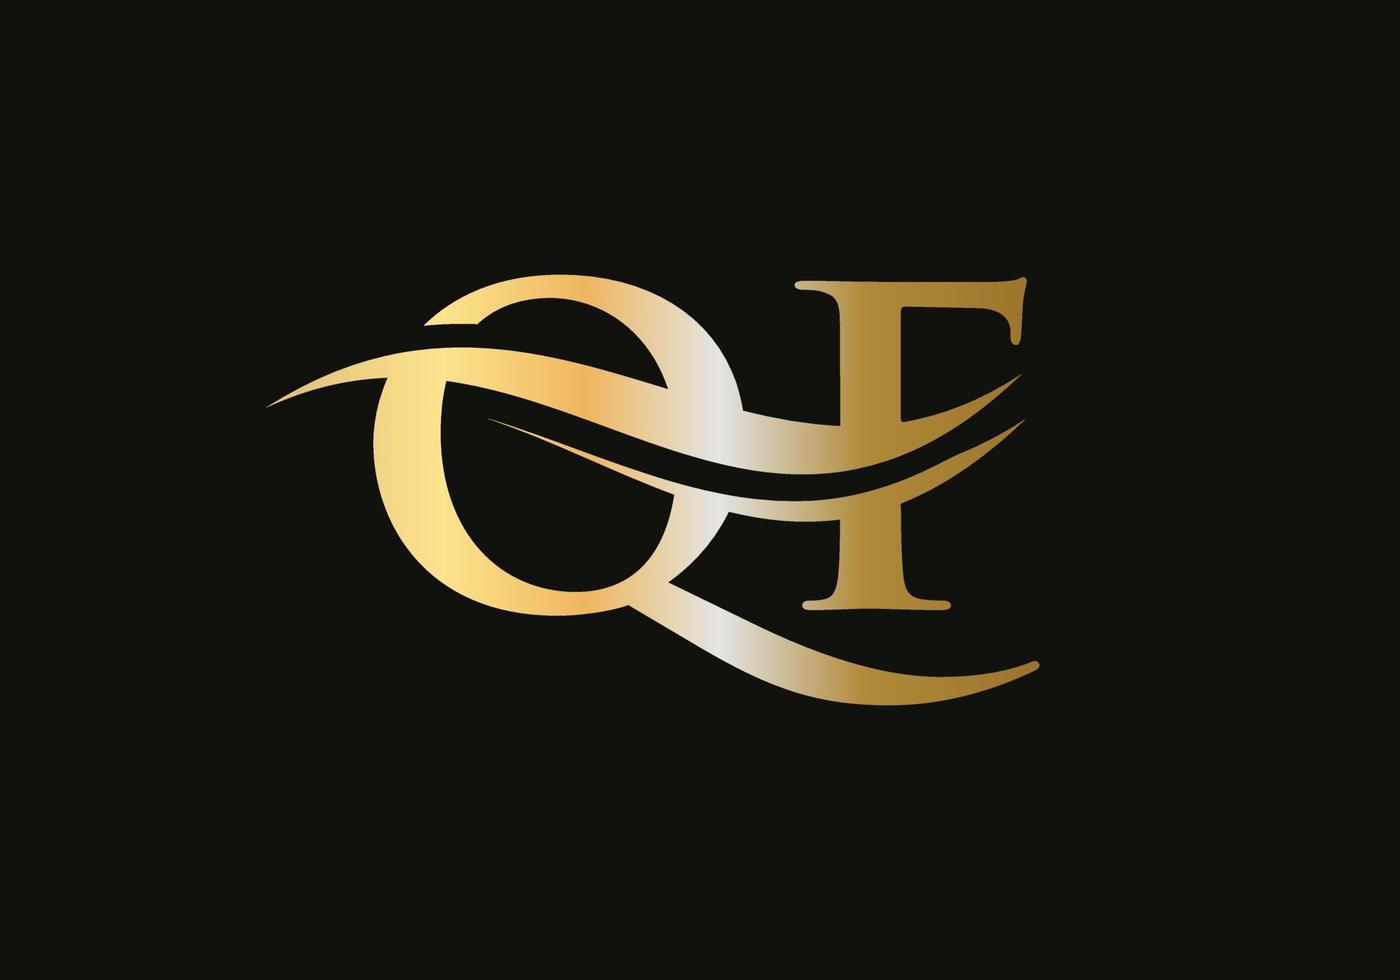 moderner buchstabe qf logo design vektor. anfänglicher verknüpfter buchstabe qf logo design mit kreativem, minimalem und modernem trend vektor